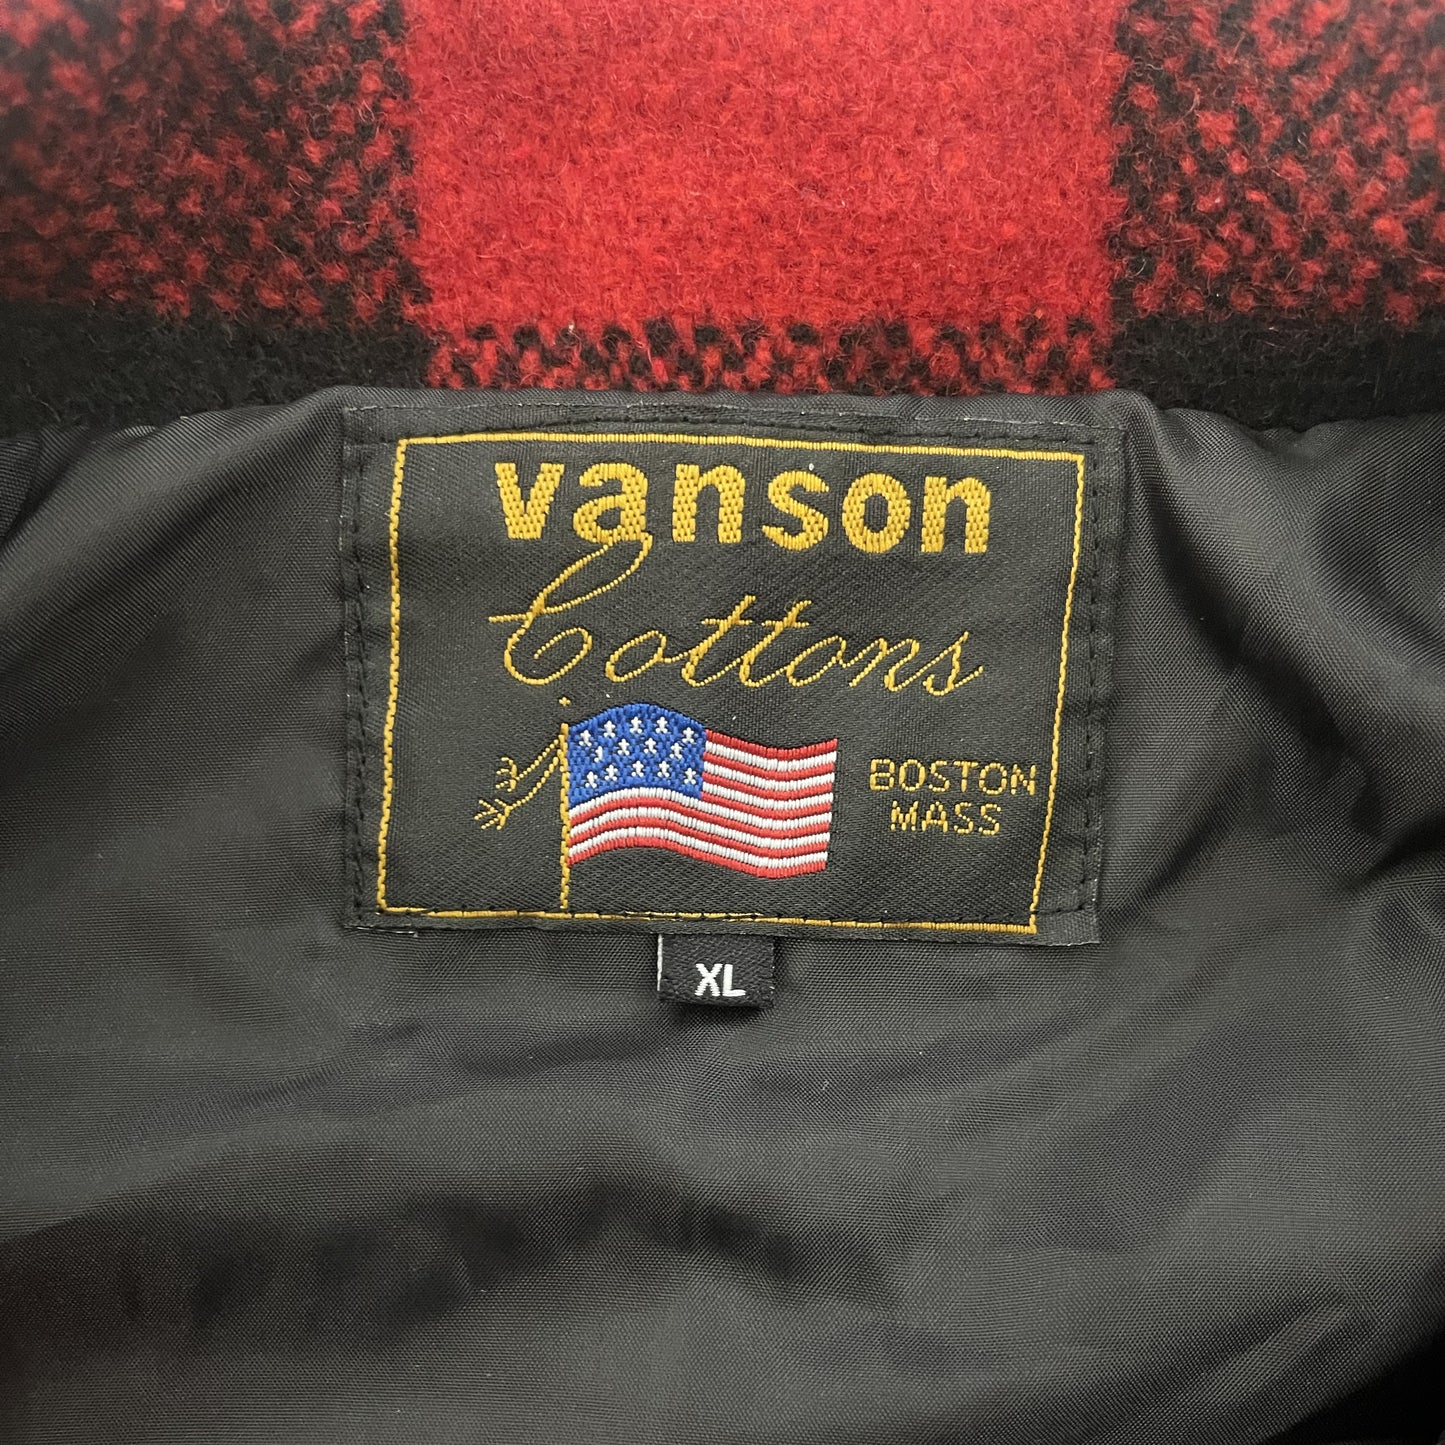 Vanson Leathers Denim Jacket